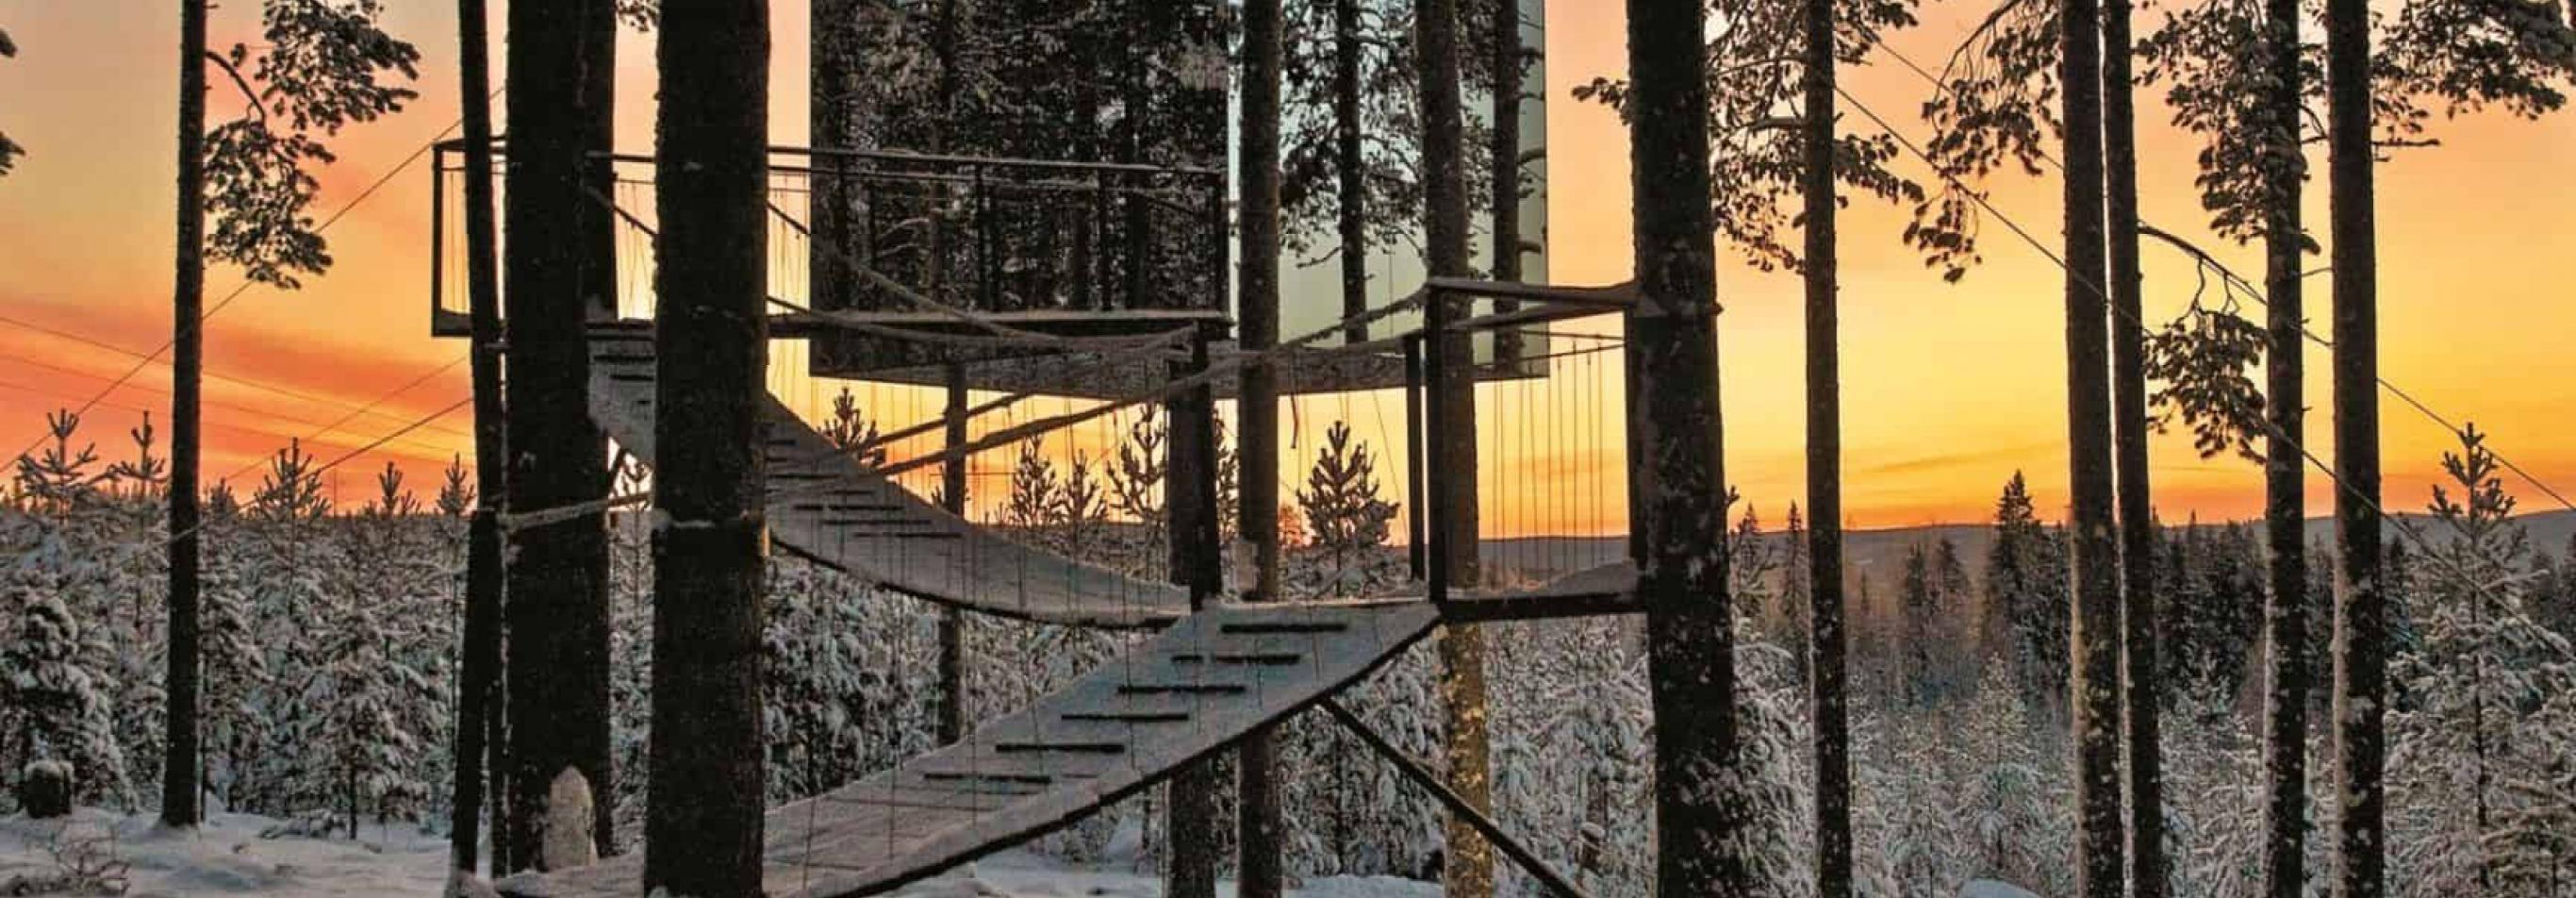 Svezia - Avventure in Lapponia svedese e Tree Hotel